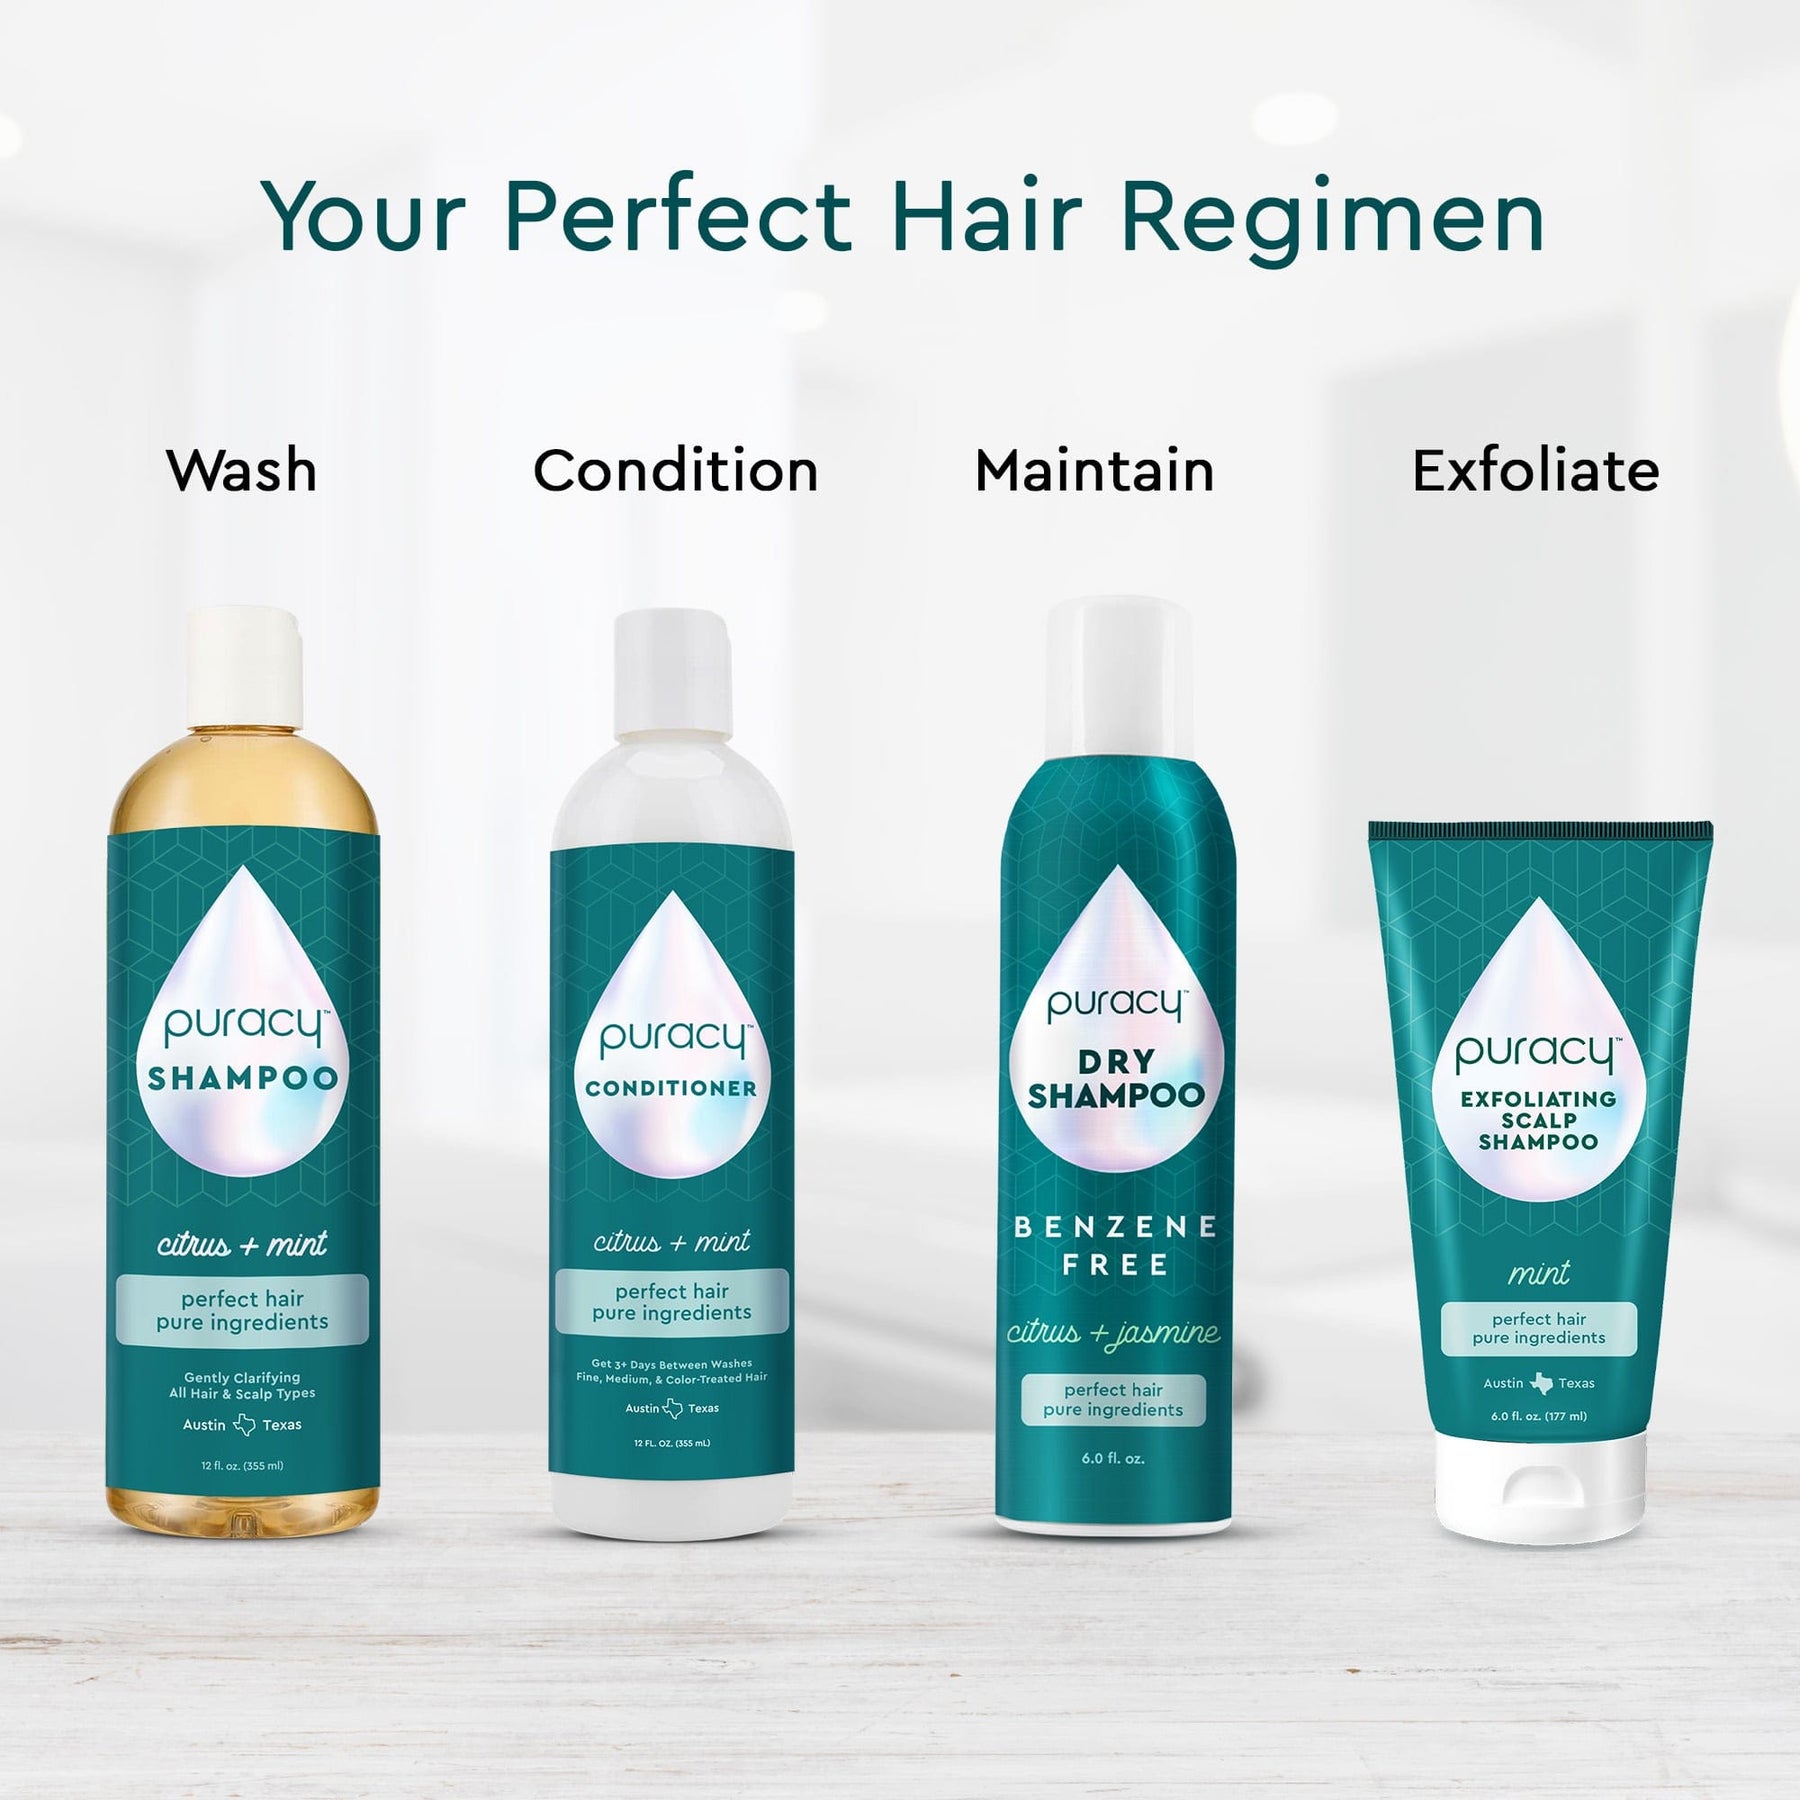 Puracy Dry Shampoo for the perfect hair regimen